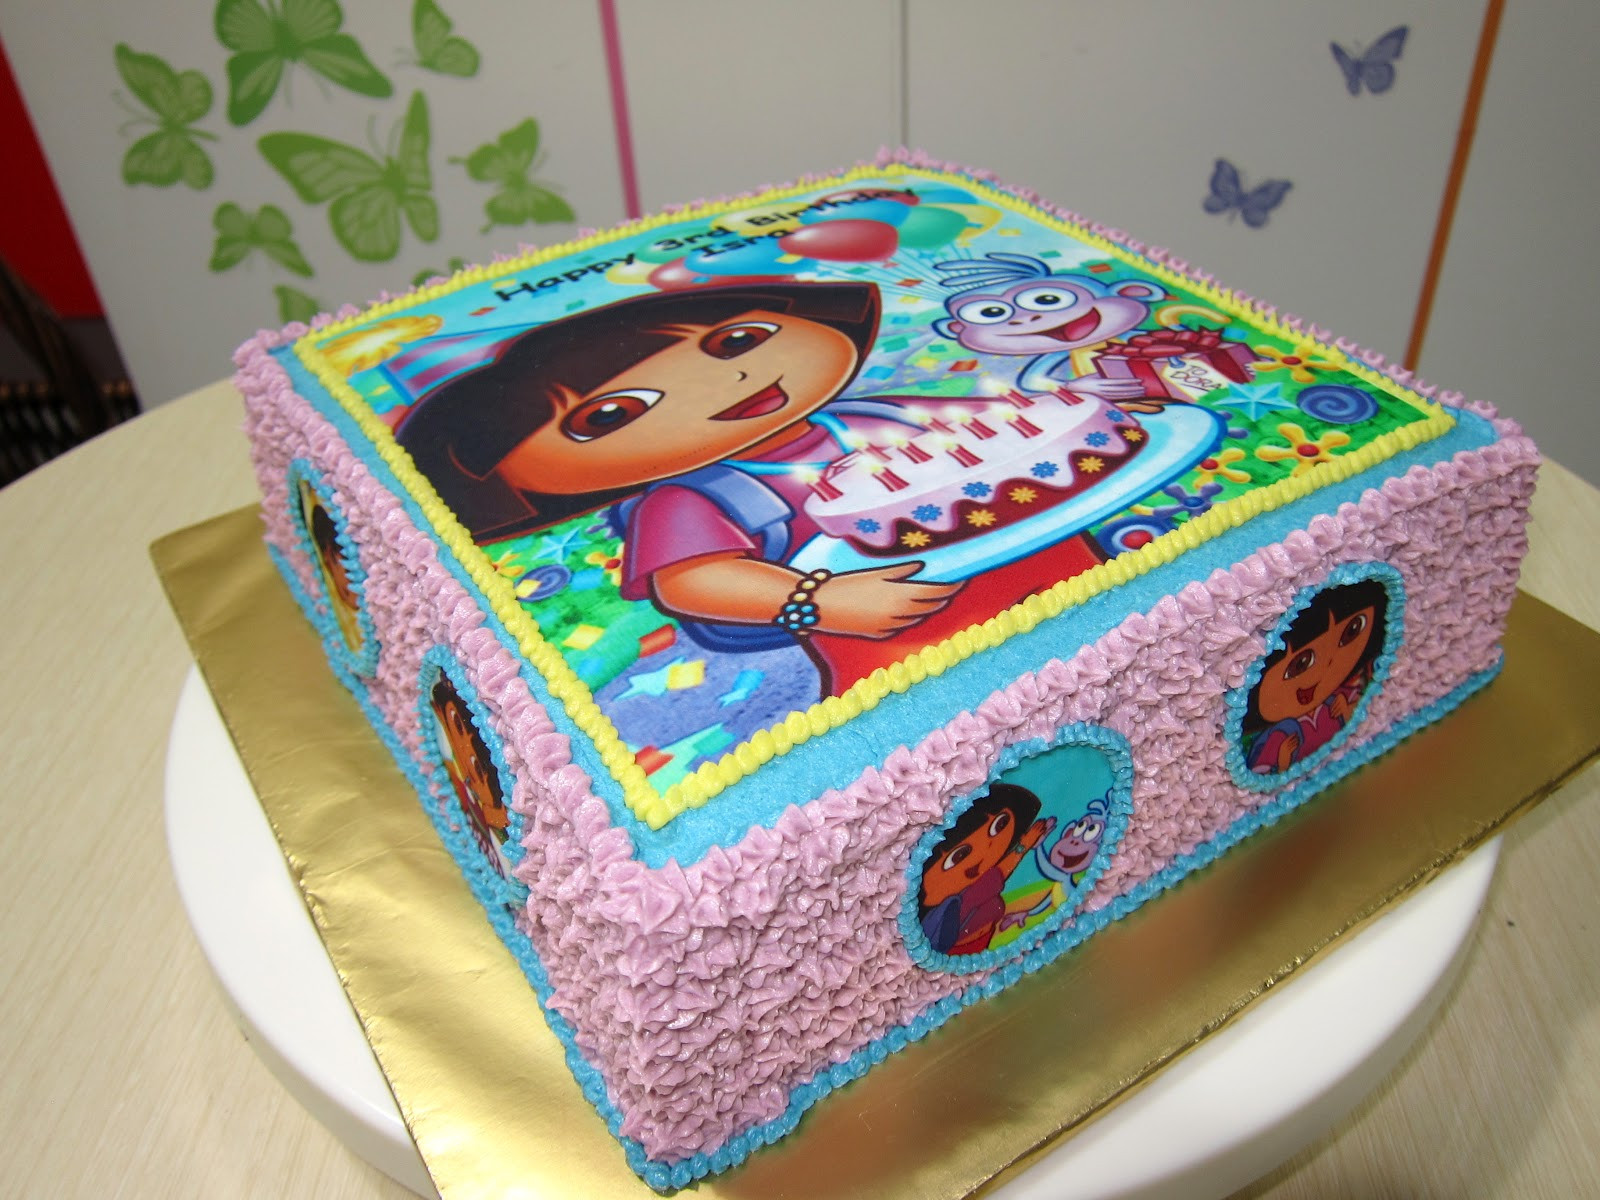 Dora The Explorer Birthday Cakes
 The Cookie Cat bakes from home Dora Birthday Cakes